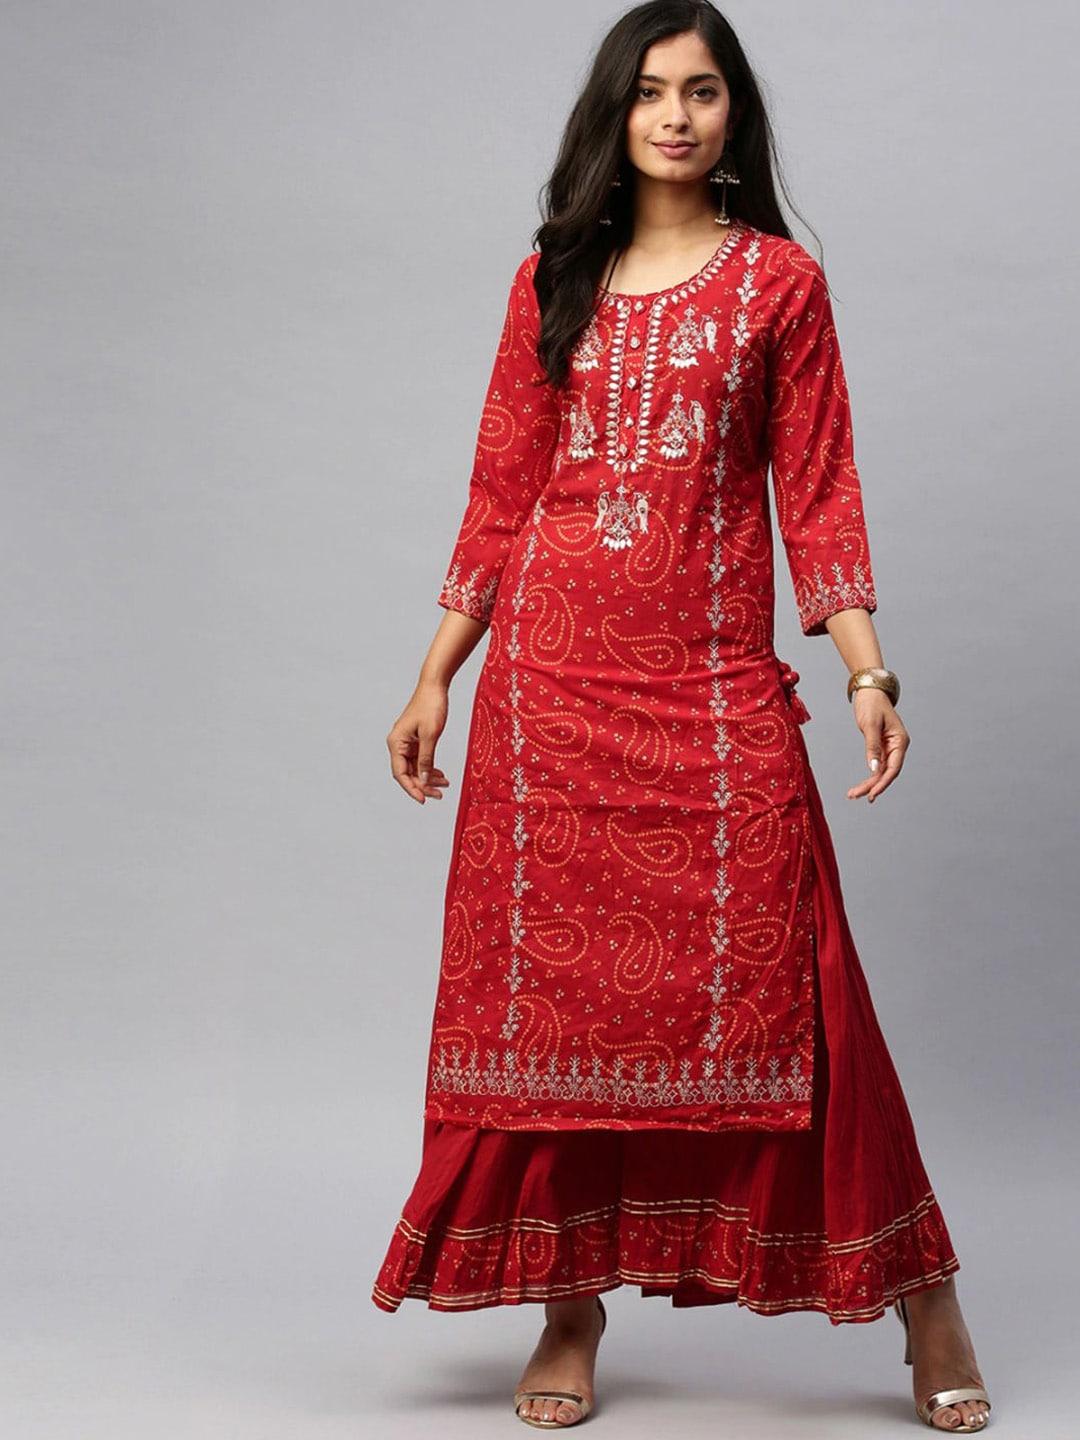 ishin-women-red-ethnic-motifs-embroidered-flared-sleeves-thread-work-anarkali-kurta